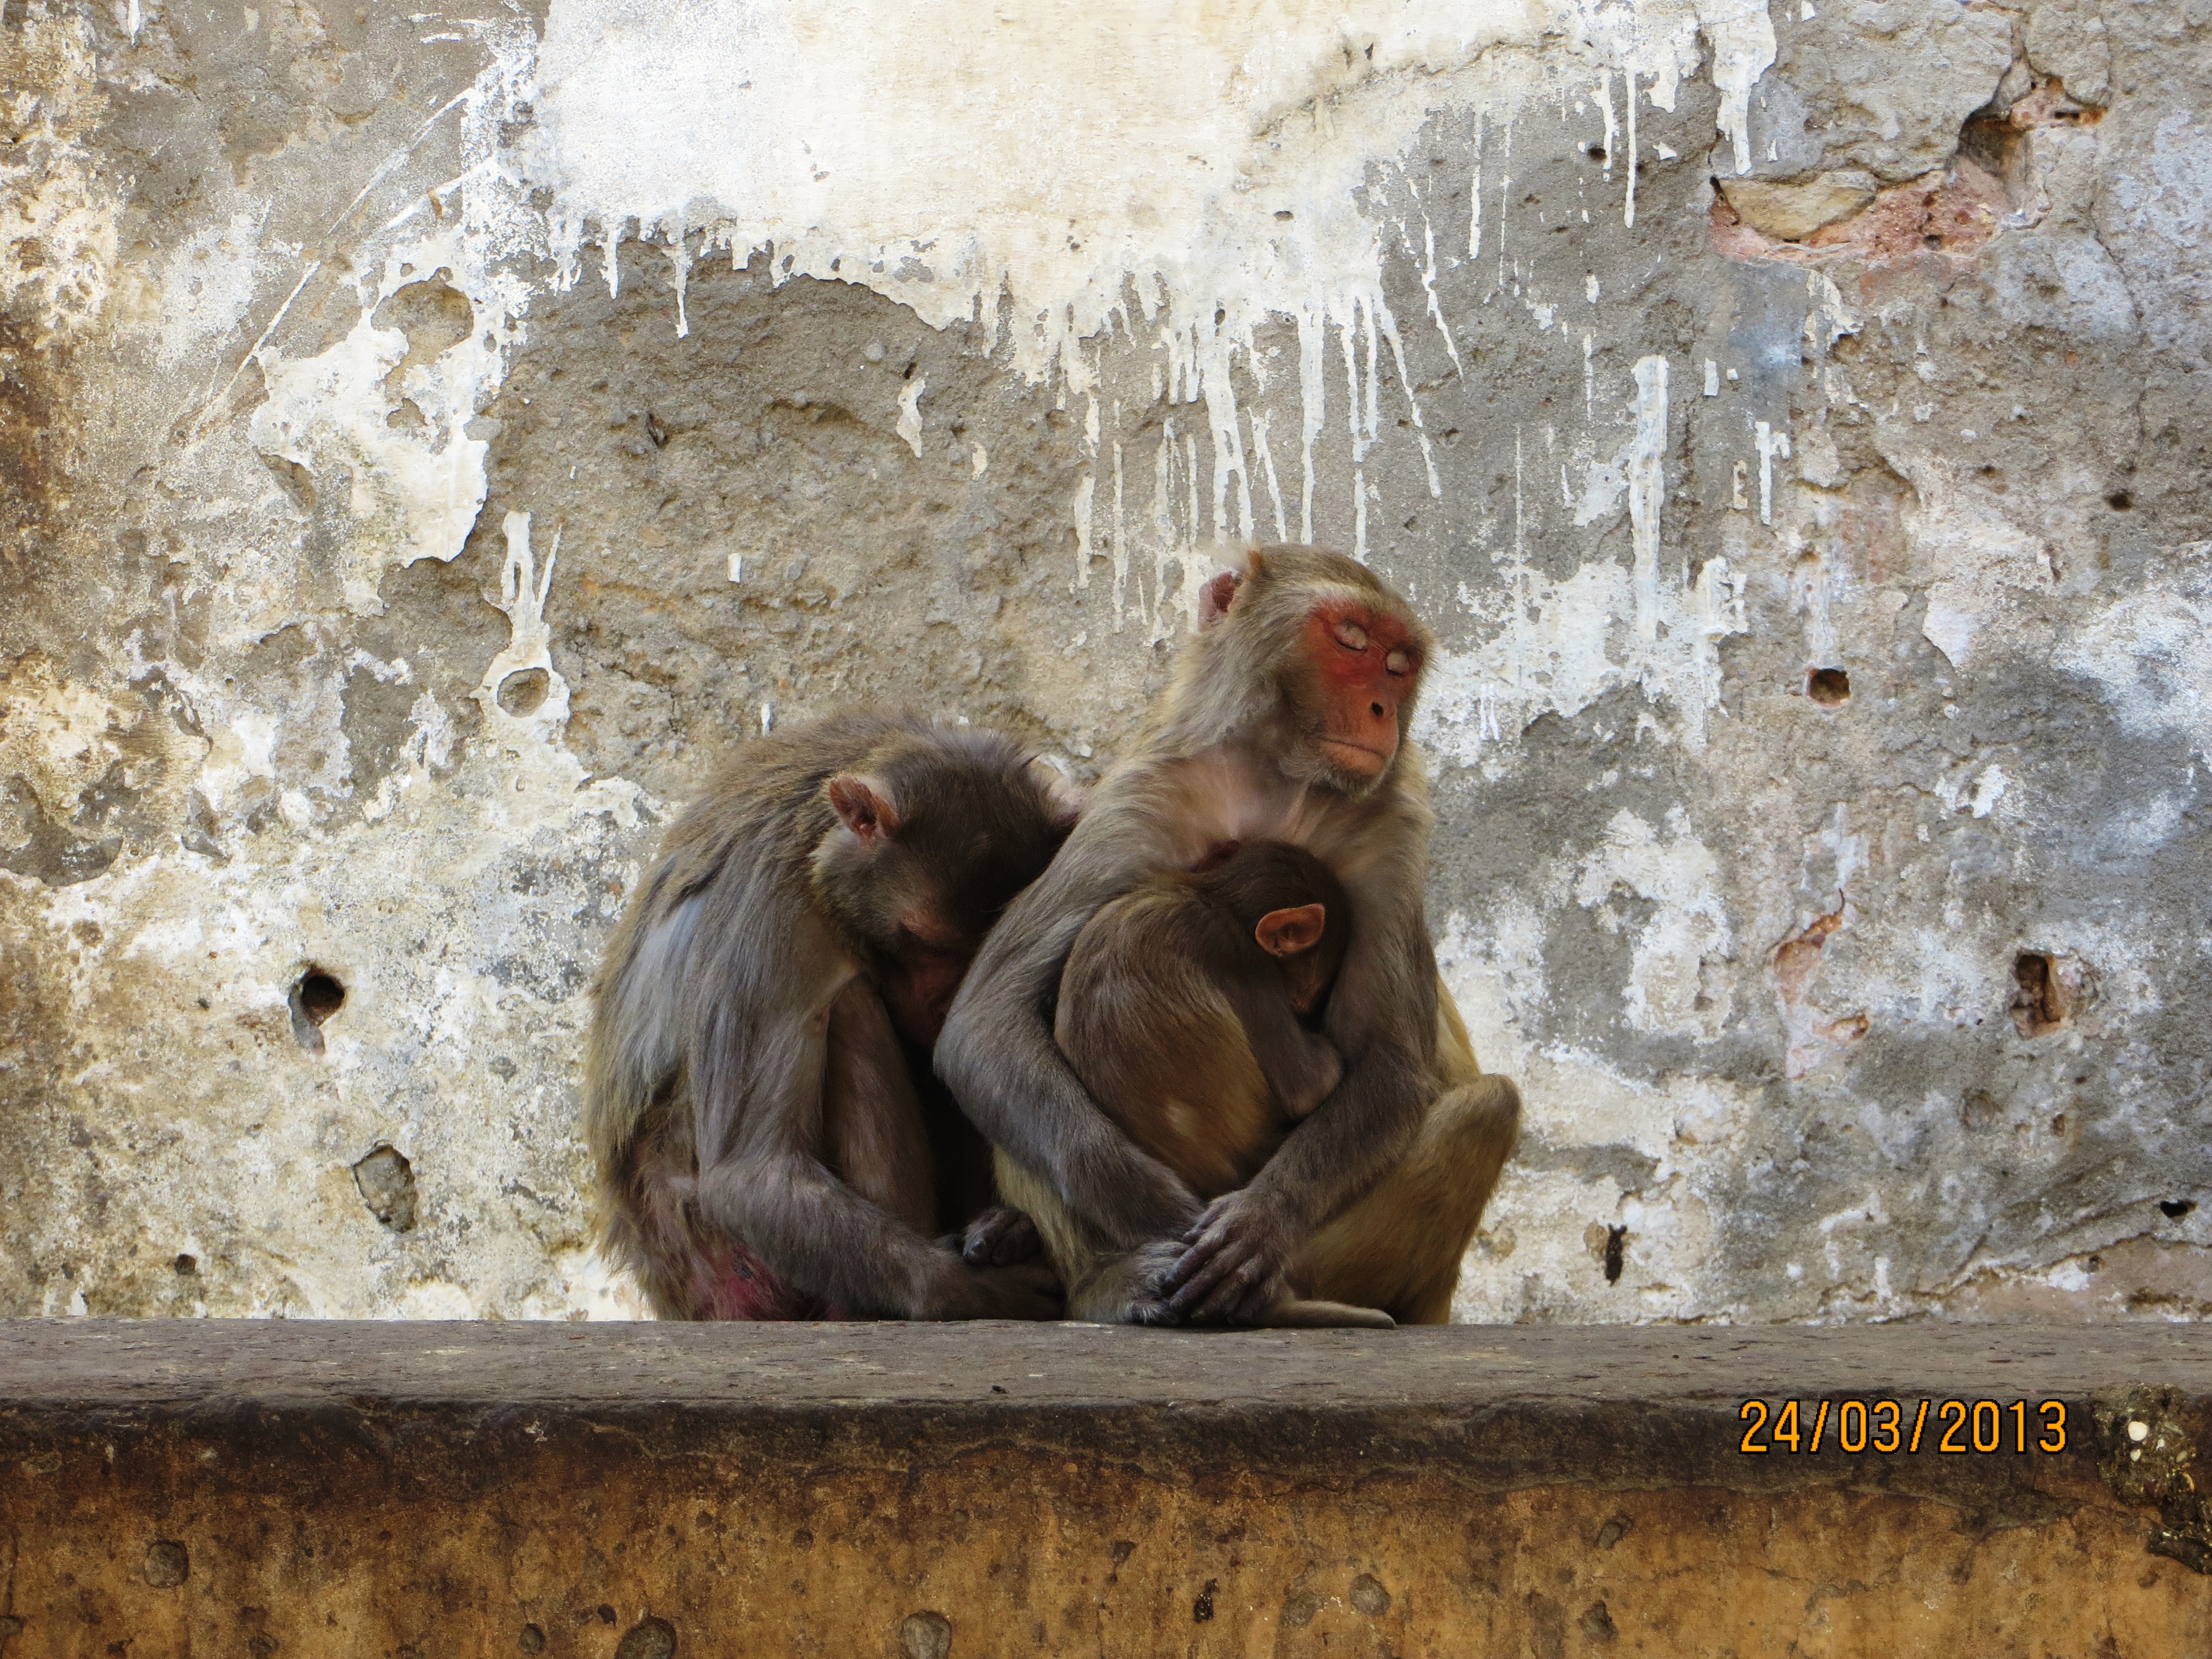 Rhesus macaques